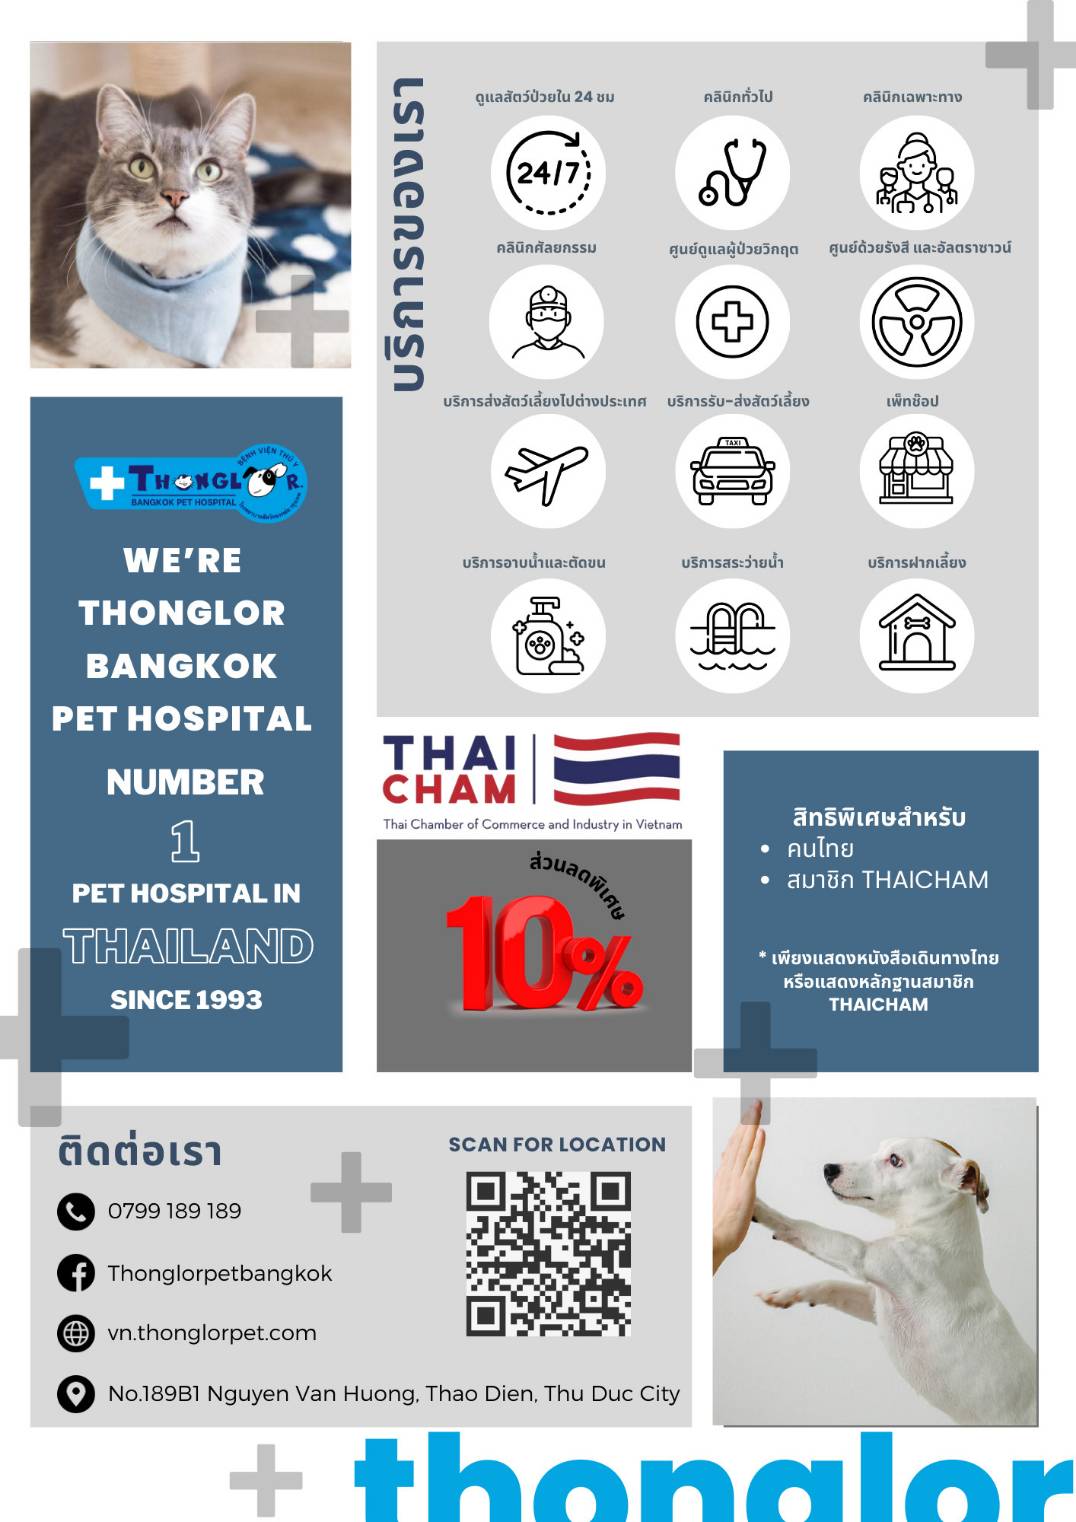 Thonglor Bangkok Pet Hospital